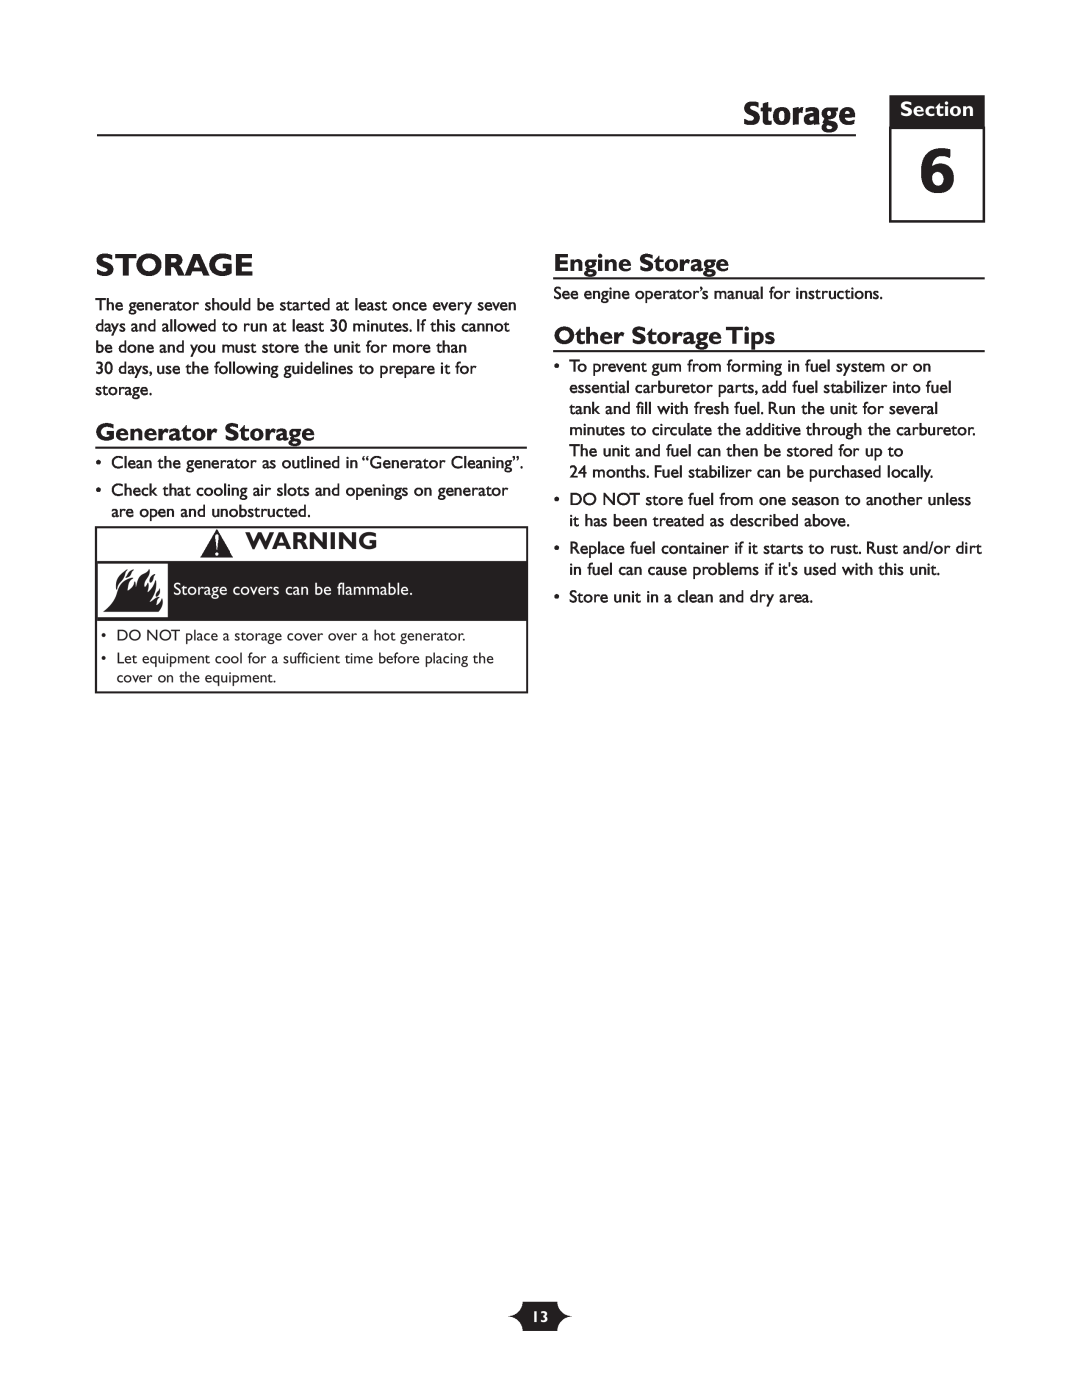 Troy-Bilt 030245 manual Storage Section, Generator Storage, Engine Storage, Other Storage Tips 